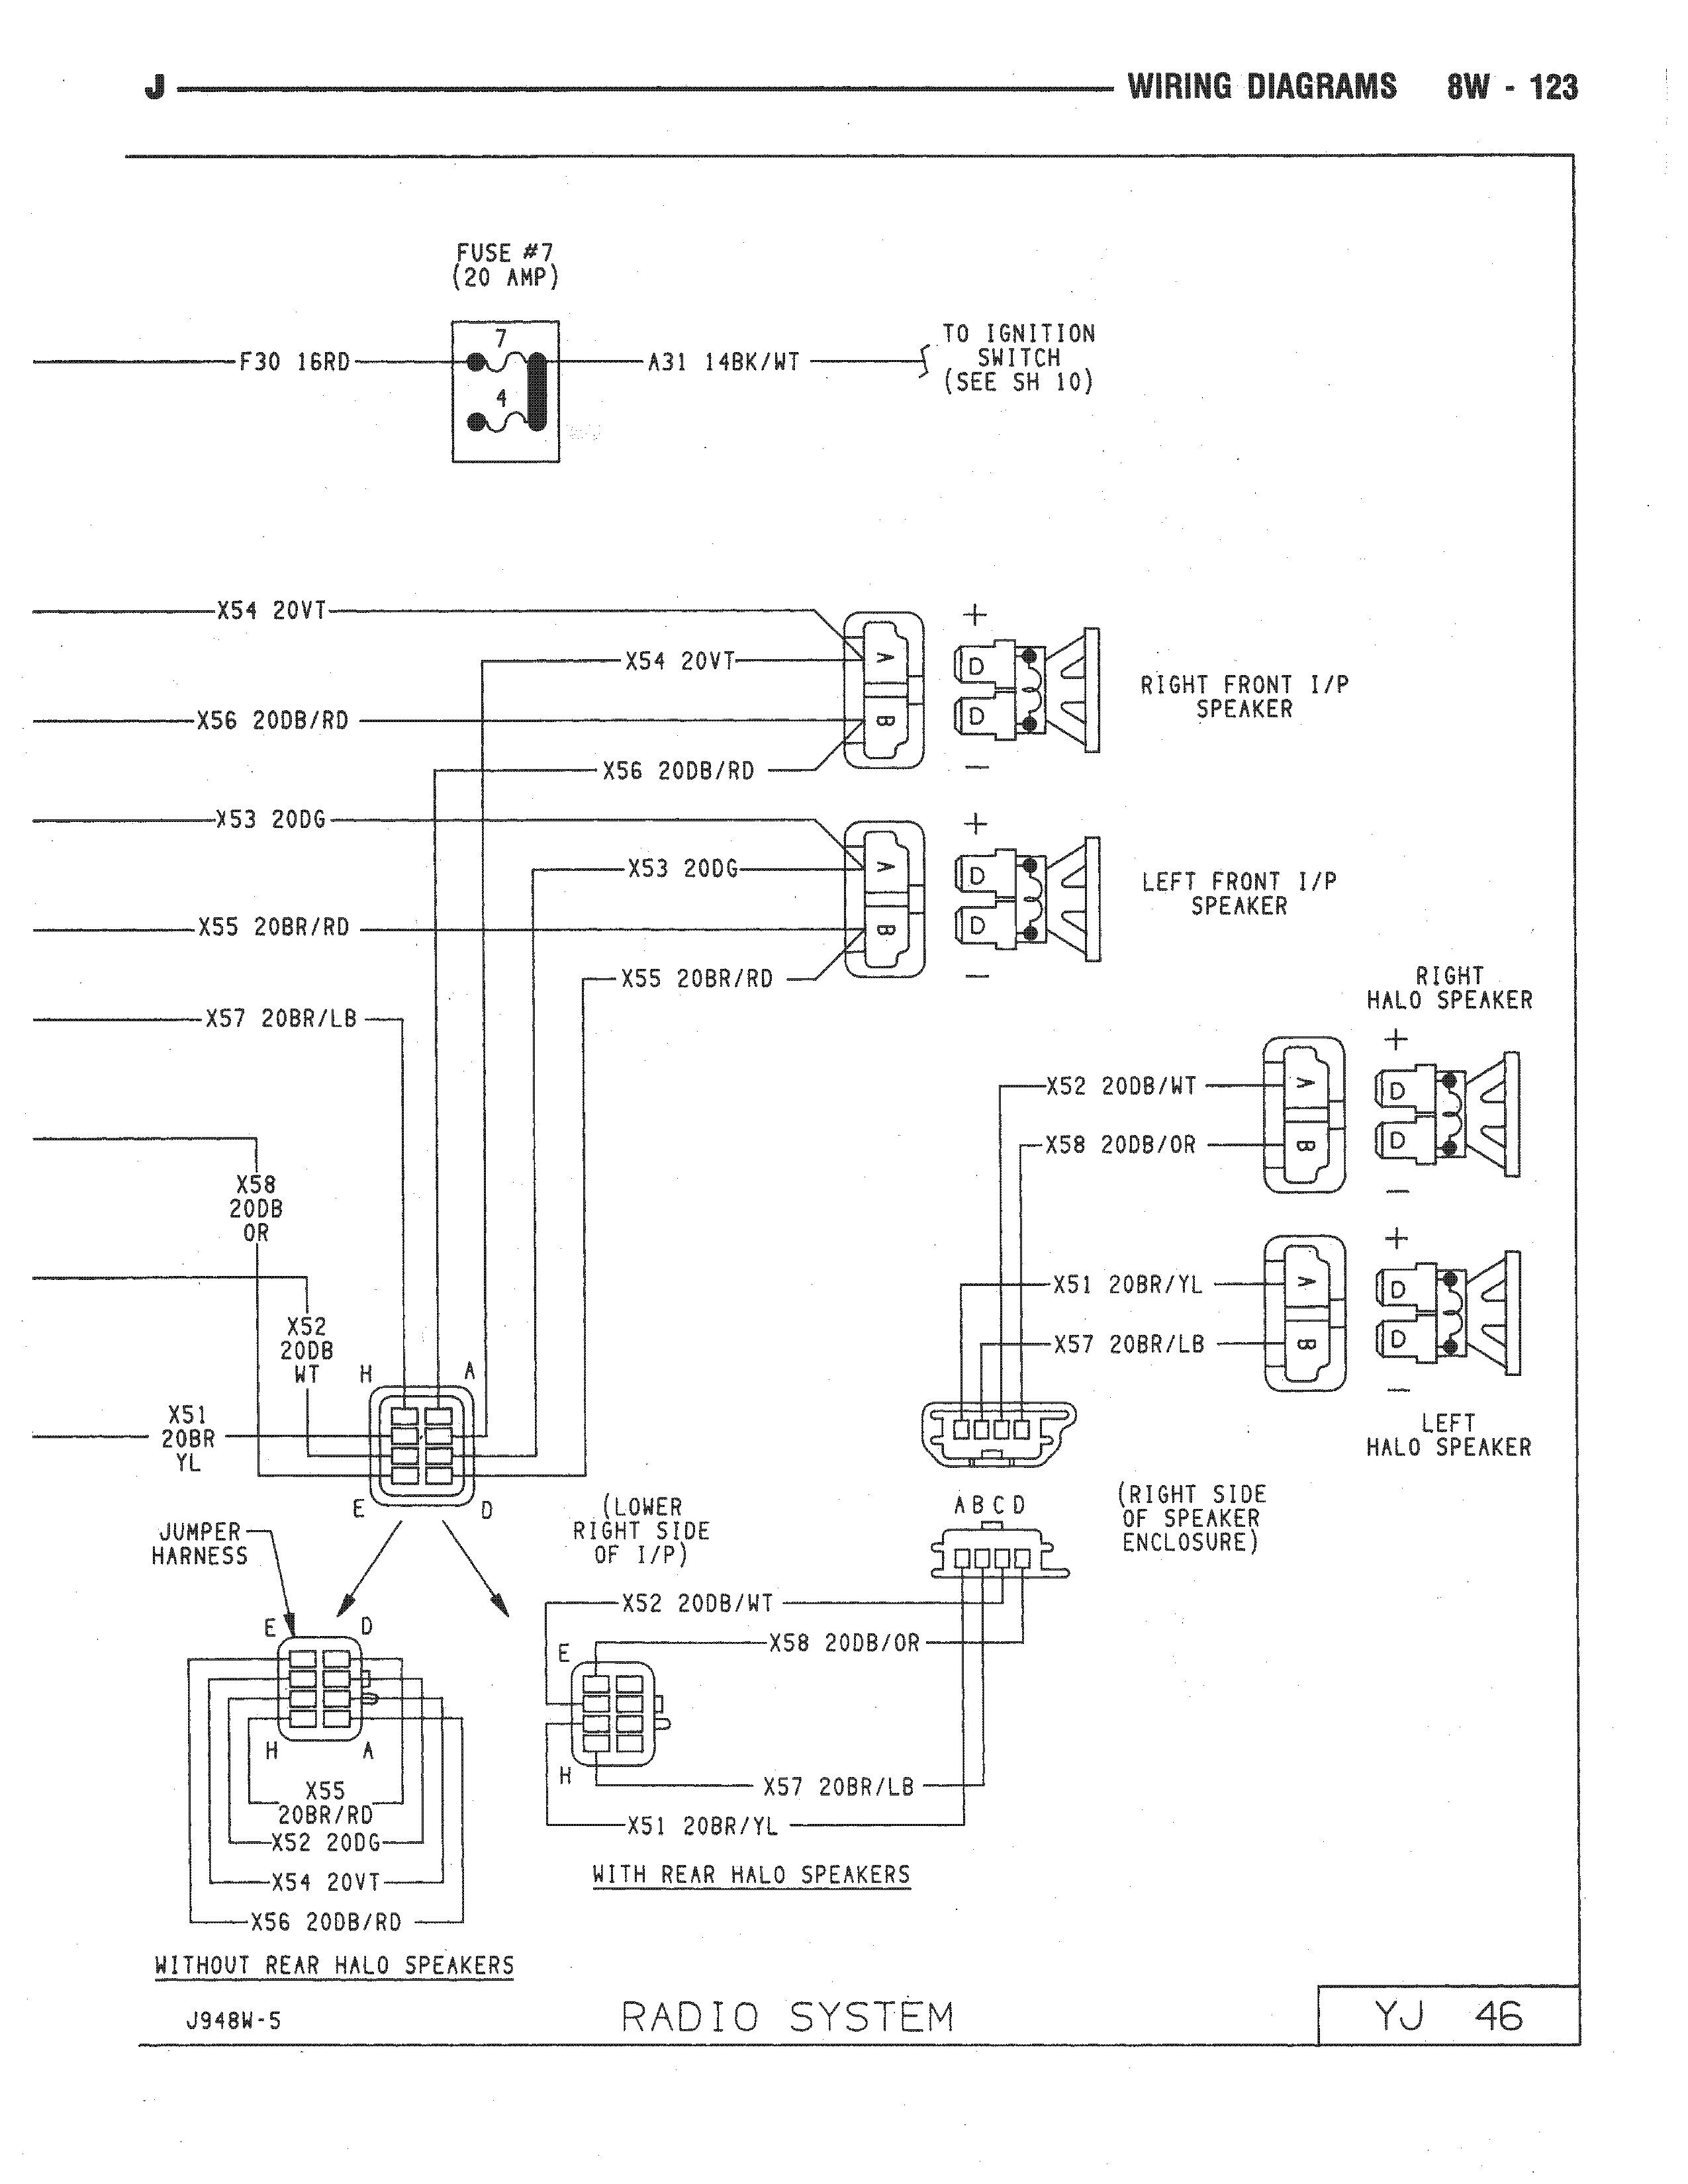 2001 Jeep Wrangler Wiring Diagram Images - Wiring Diagram Sample